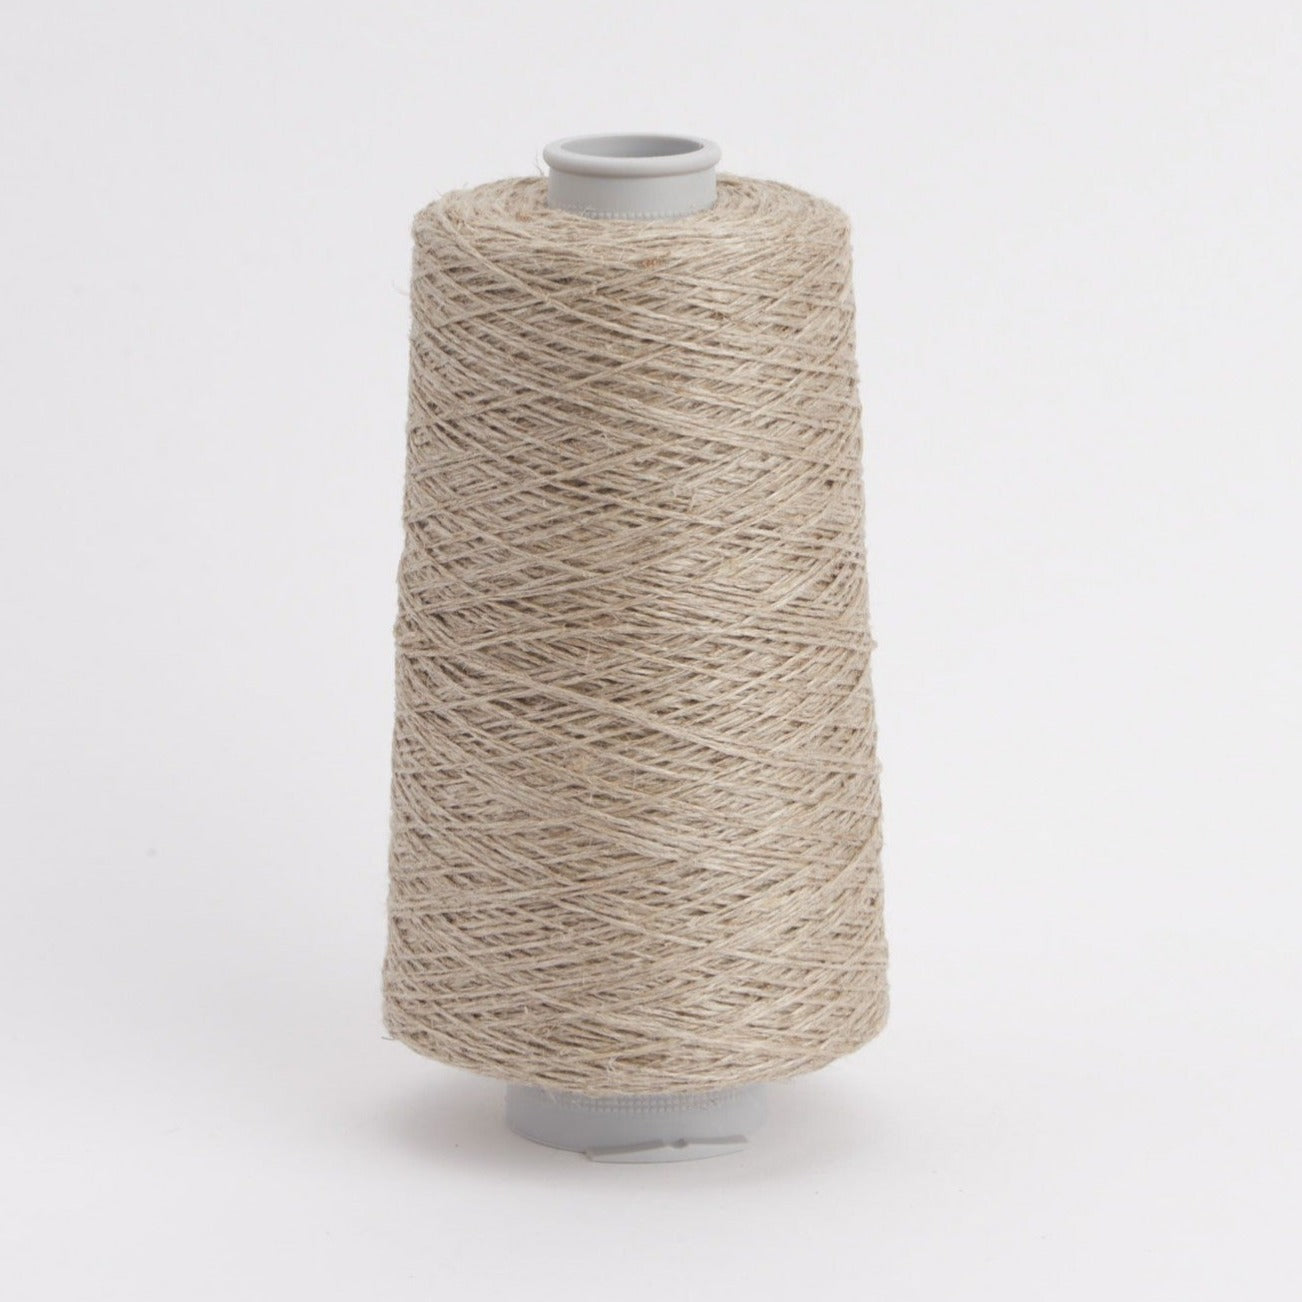 Venne Dry Spun Linen Nm 16/2 - 100g - Thread Collective Australia